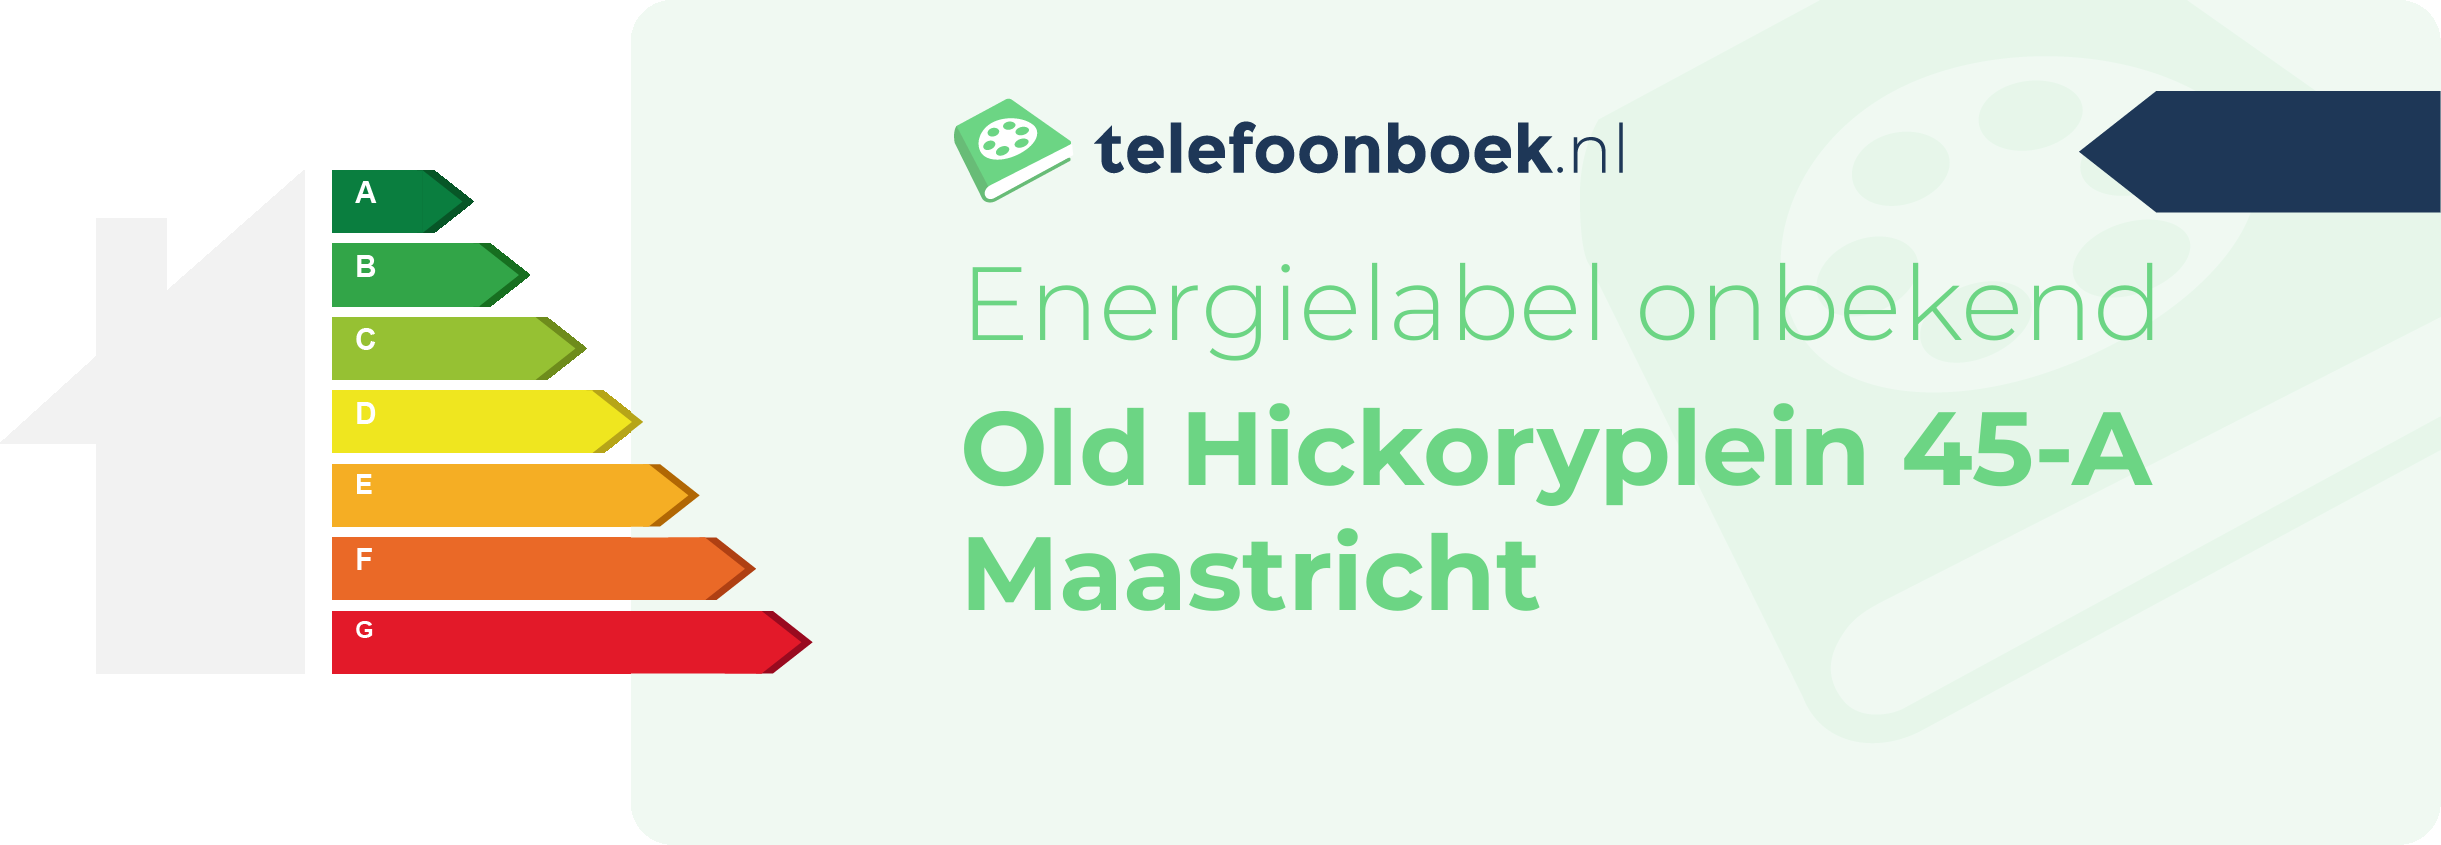 Energielabel Old Hickoryplein 45-A Maastricht